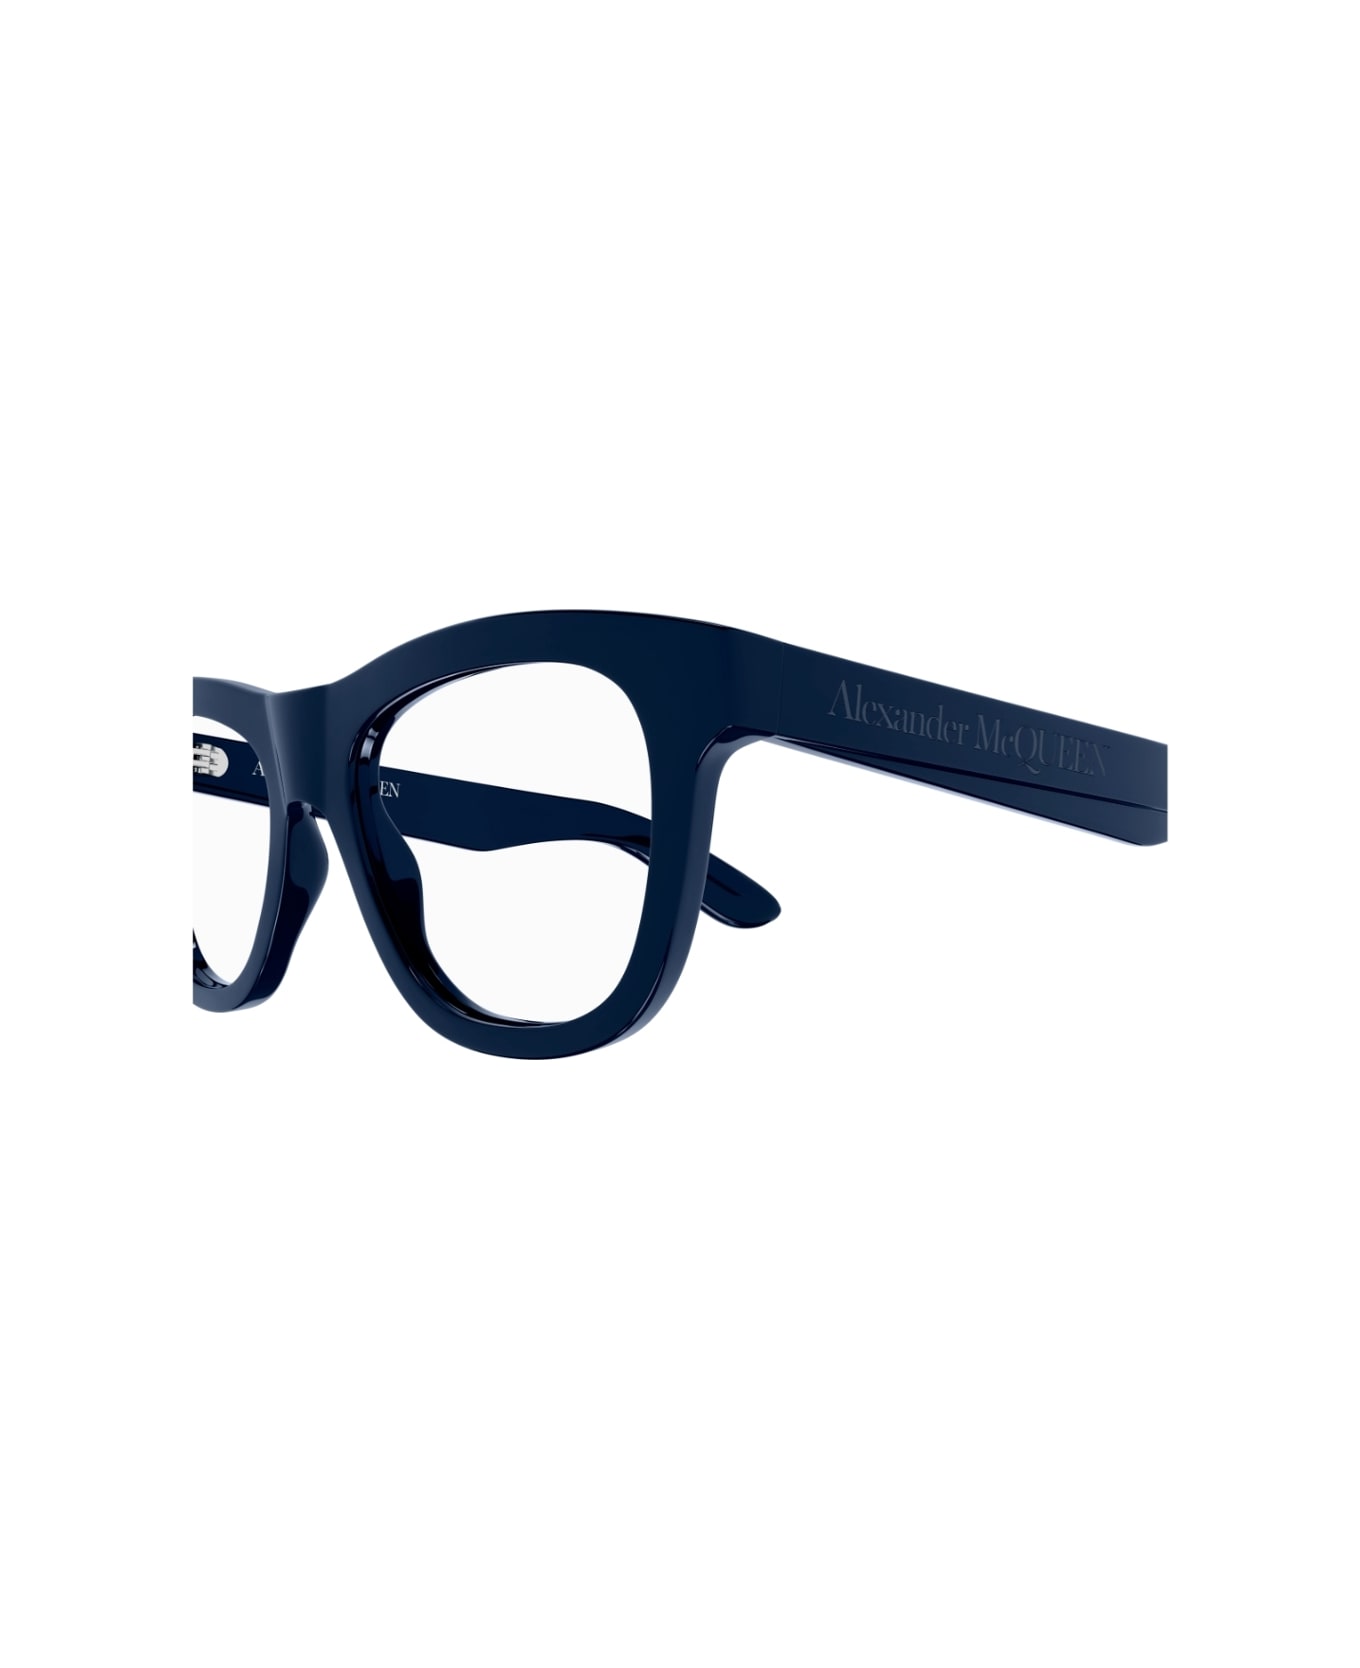 Alexander McQueen Eyewear AM0421o 004 Glasses - Blu